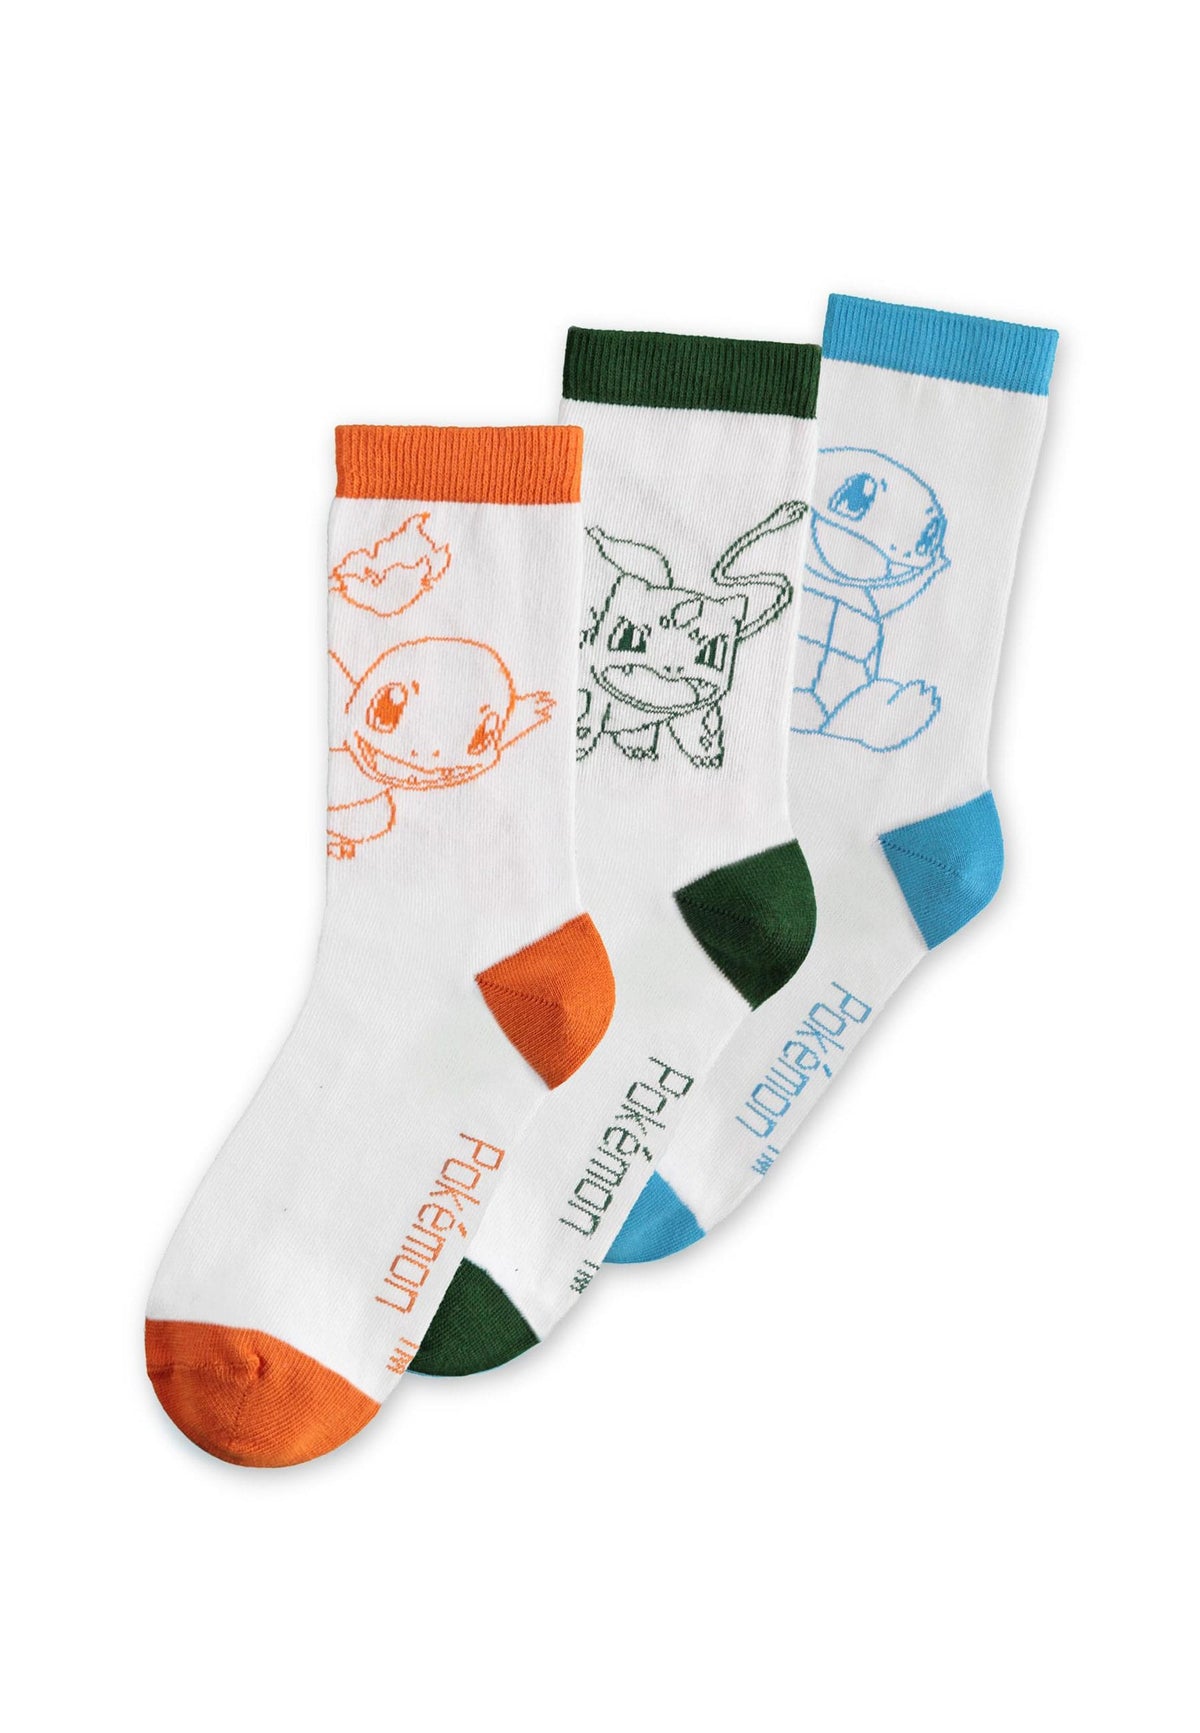 Pokémon - Socken - Glumanda, Bisasam, Schiggy - 3er-Pack - Größe 43-46 (Difuzed)